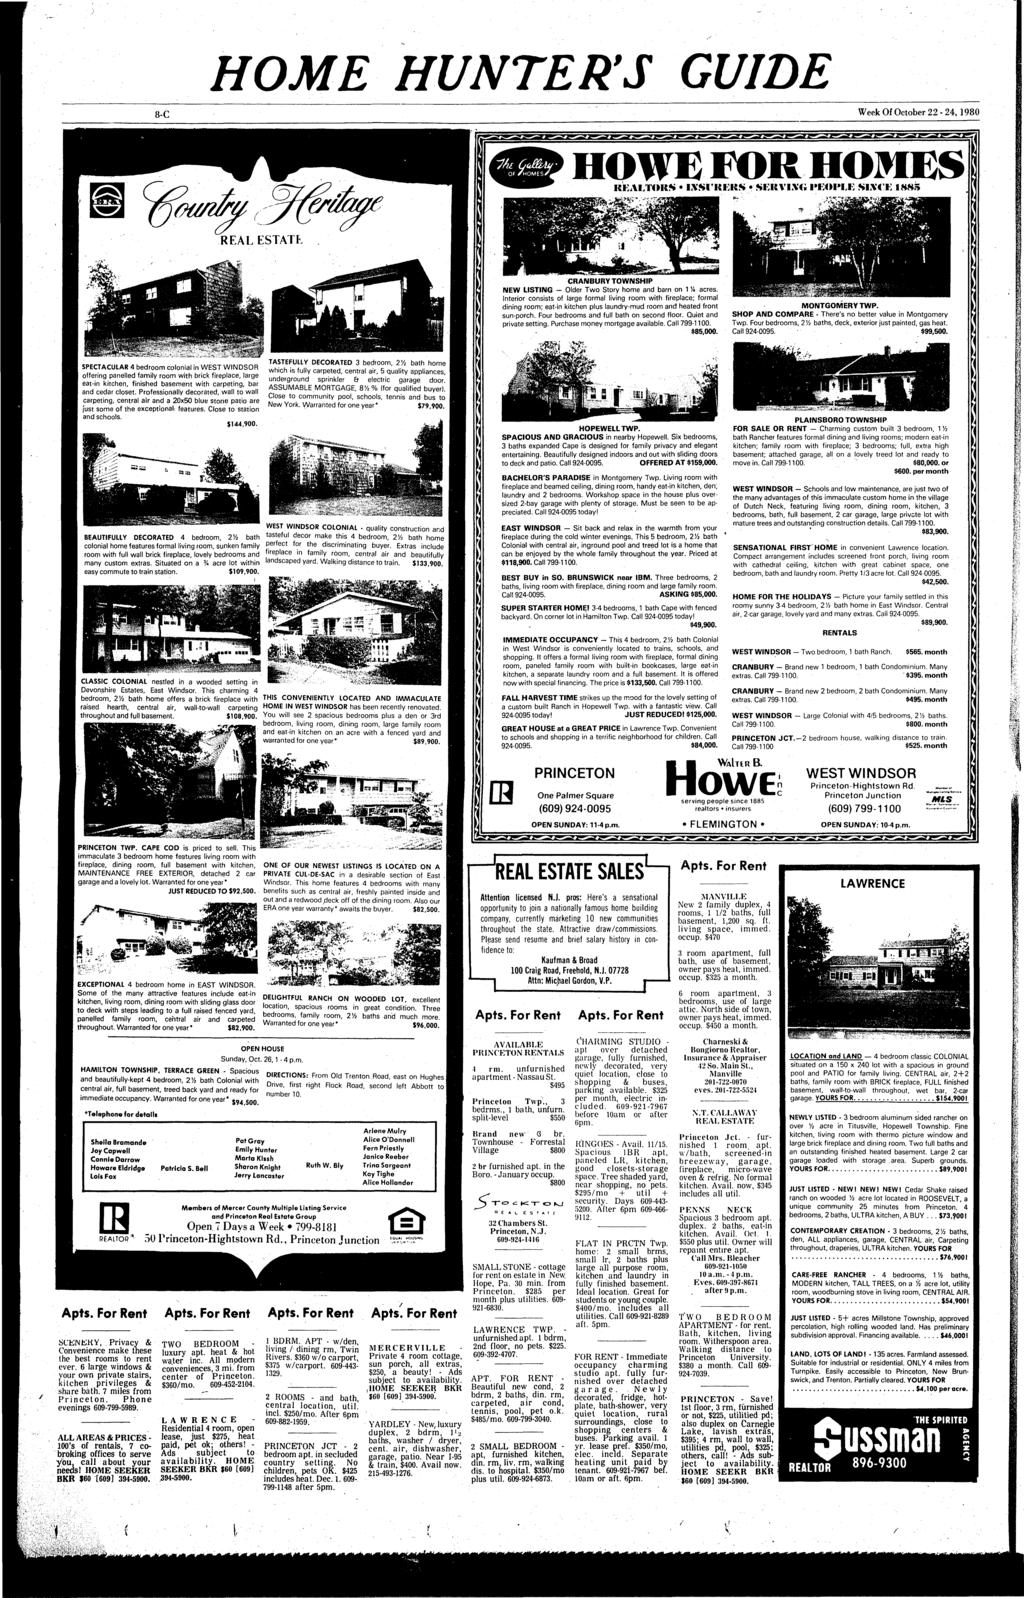 HOME HUNTER'S GUIDE 8-C Week Of October 22-24,1980 HOWE FOR HOMES REALTORS LWfKEKS' SIR Vl.\<. PEOPLE SLYCE 1885 REALESTATK CRANBURY TOWNSHIP NEW LISTING Older Two Story home and barn on 1 % acres.